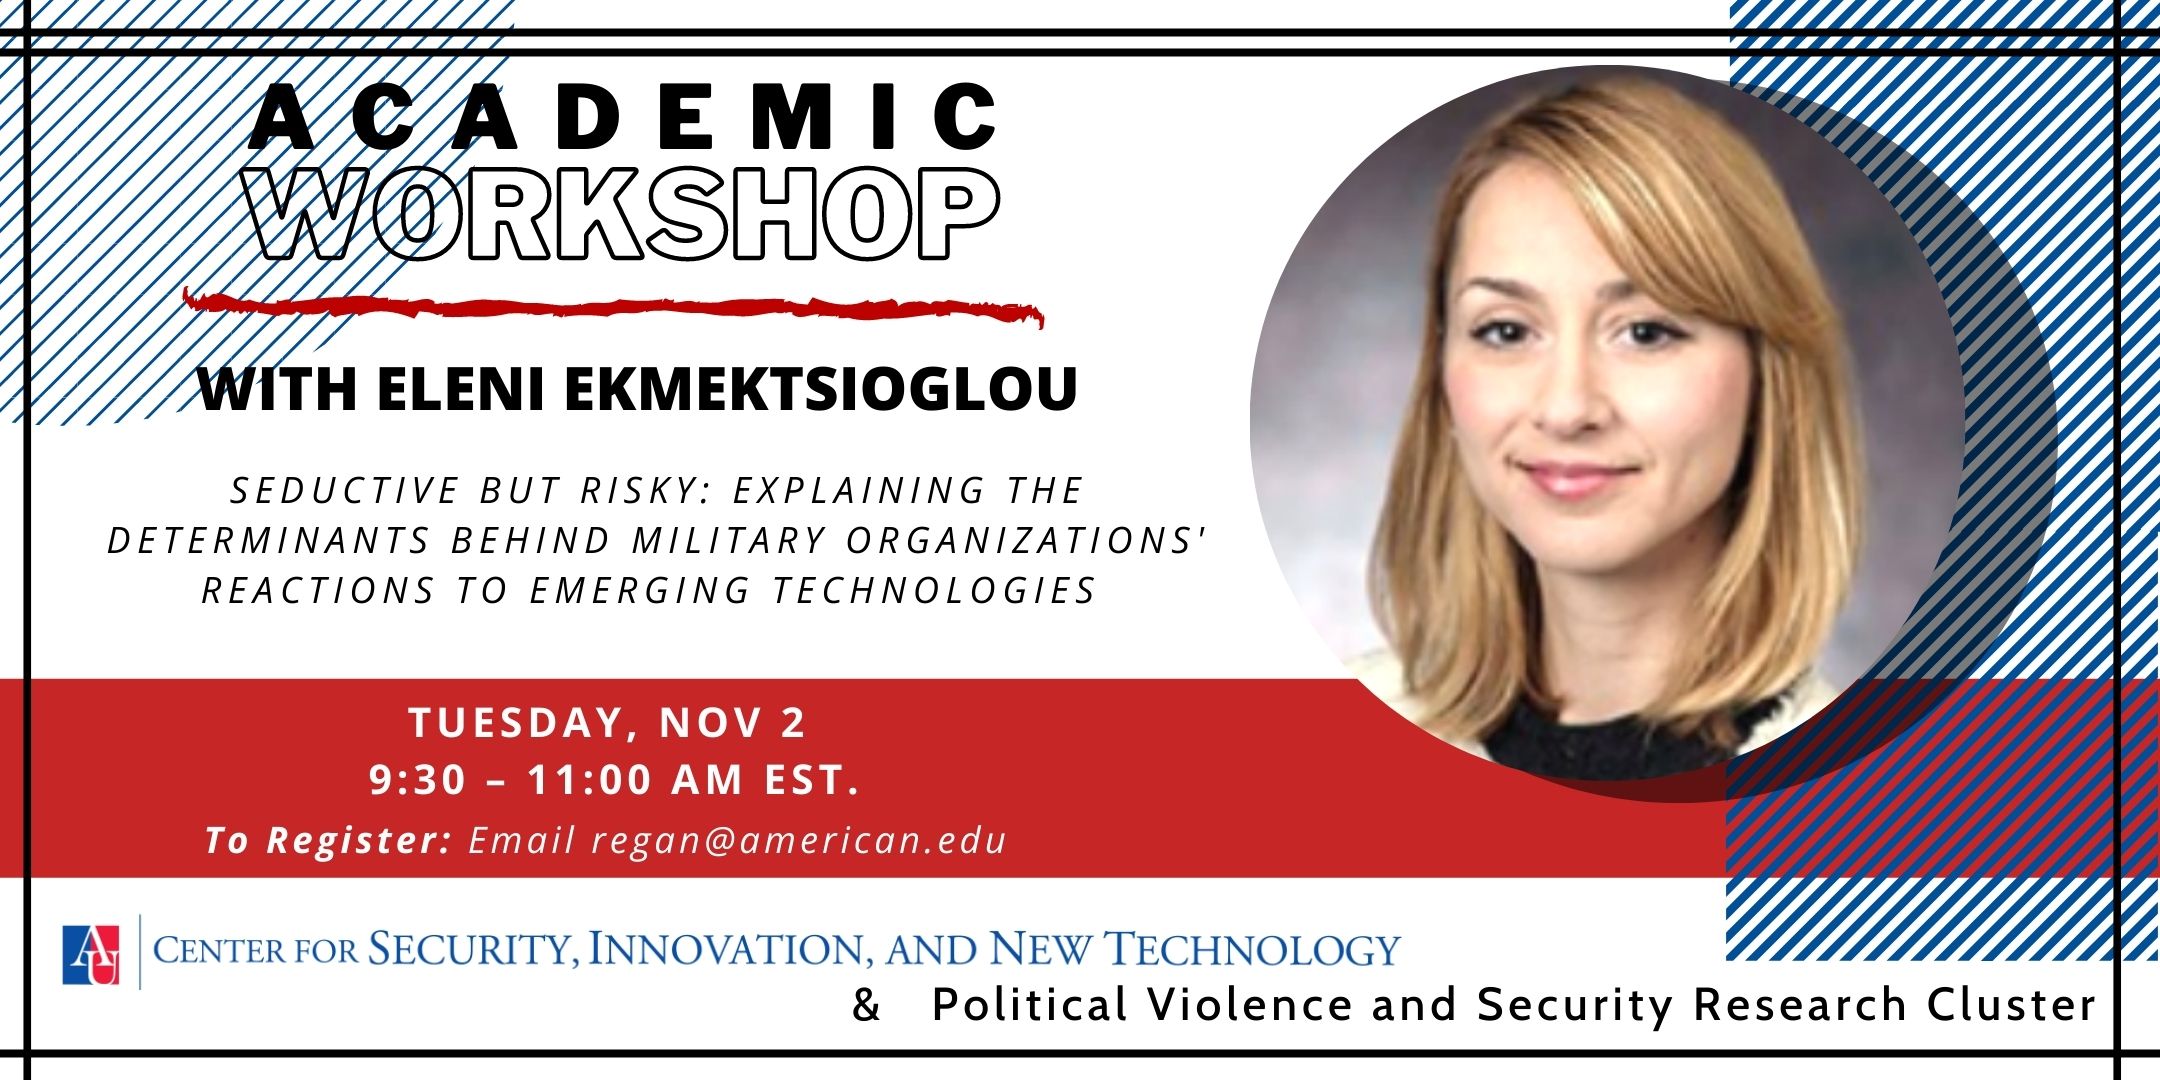 Email regan@american.edu to register for November 2 Academic Workshop with Eleni Ekmektsioglou